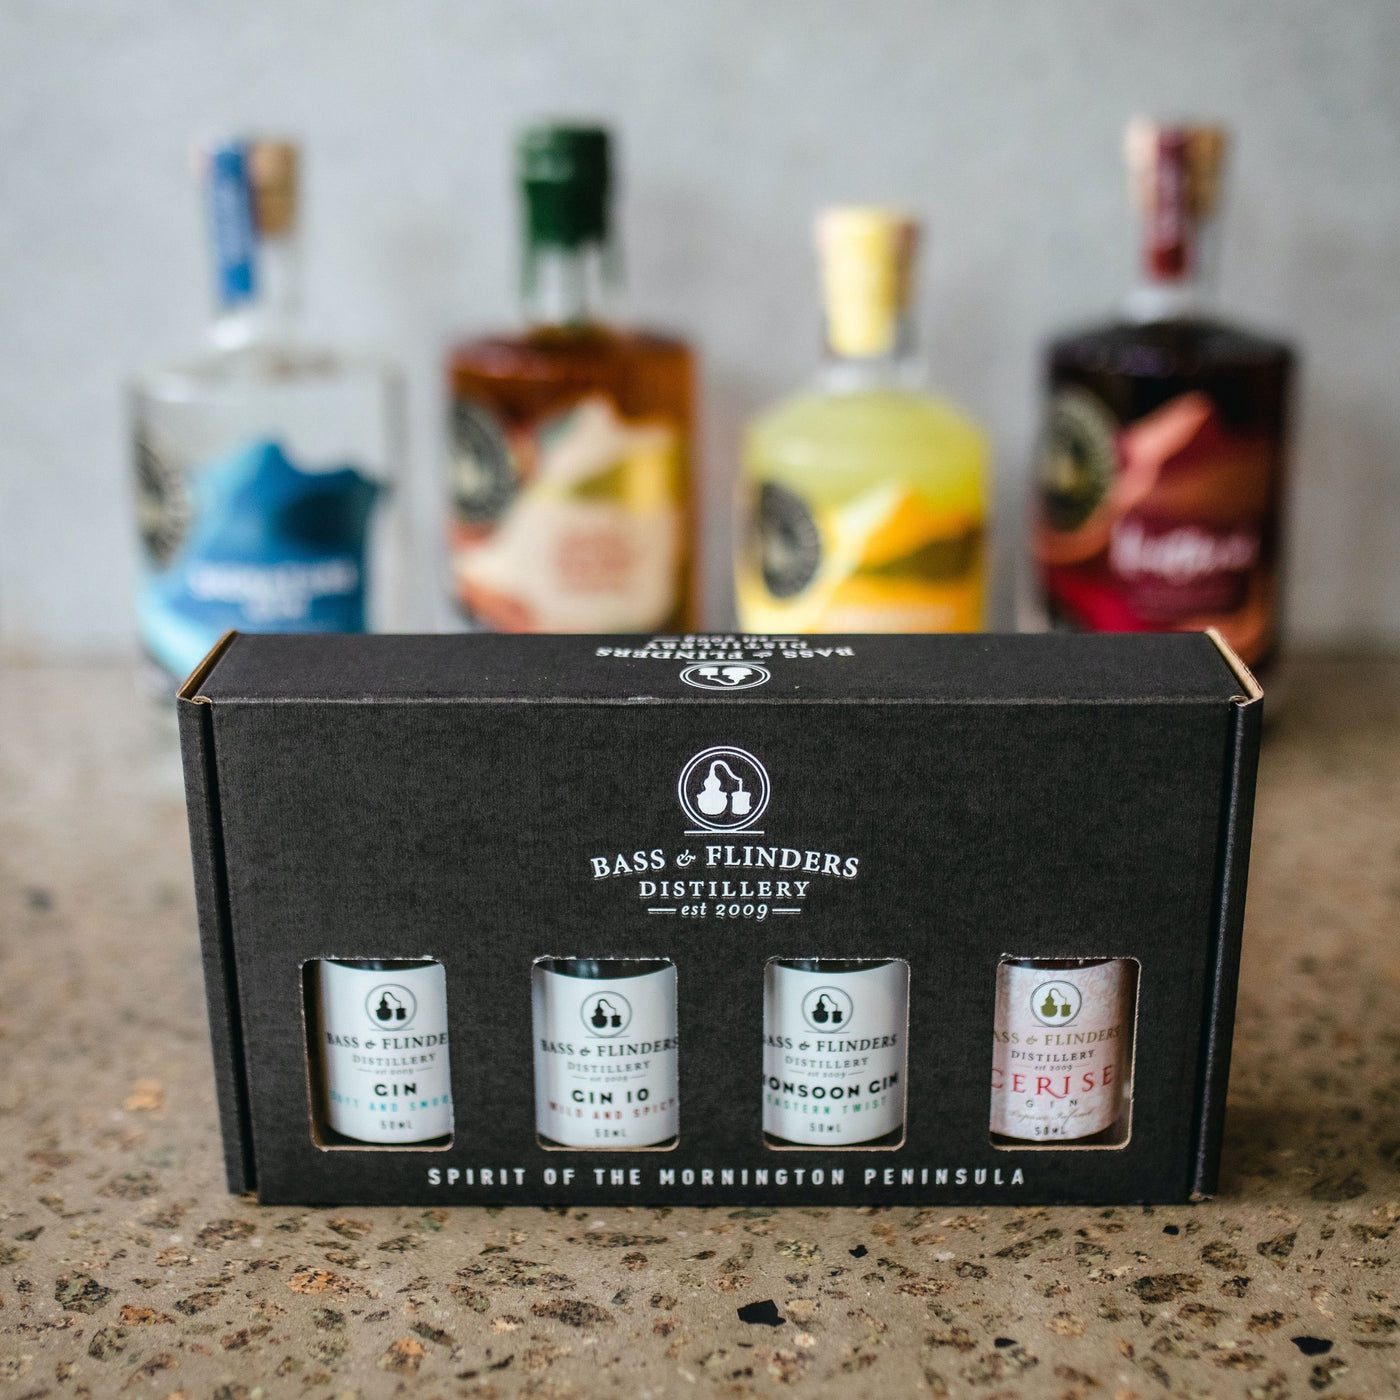 Bass & Flinders Distillery Gin Gift Pack giveaway